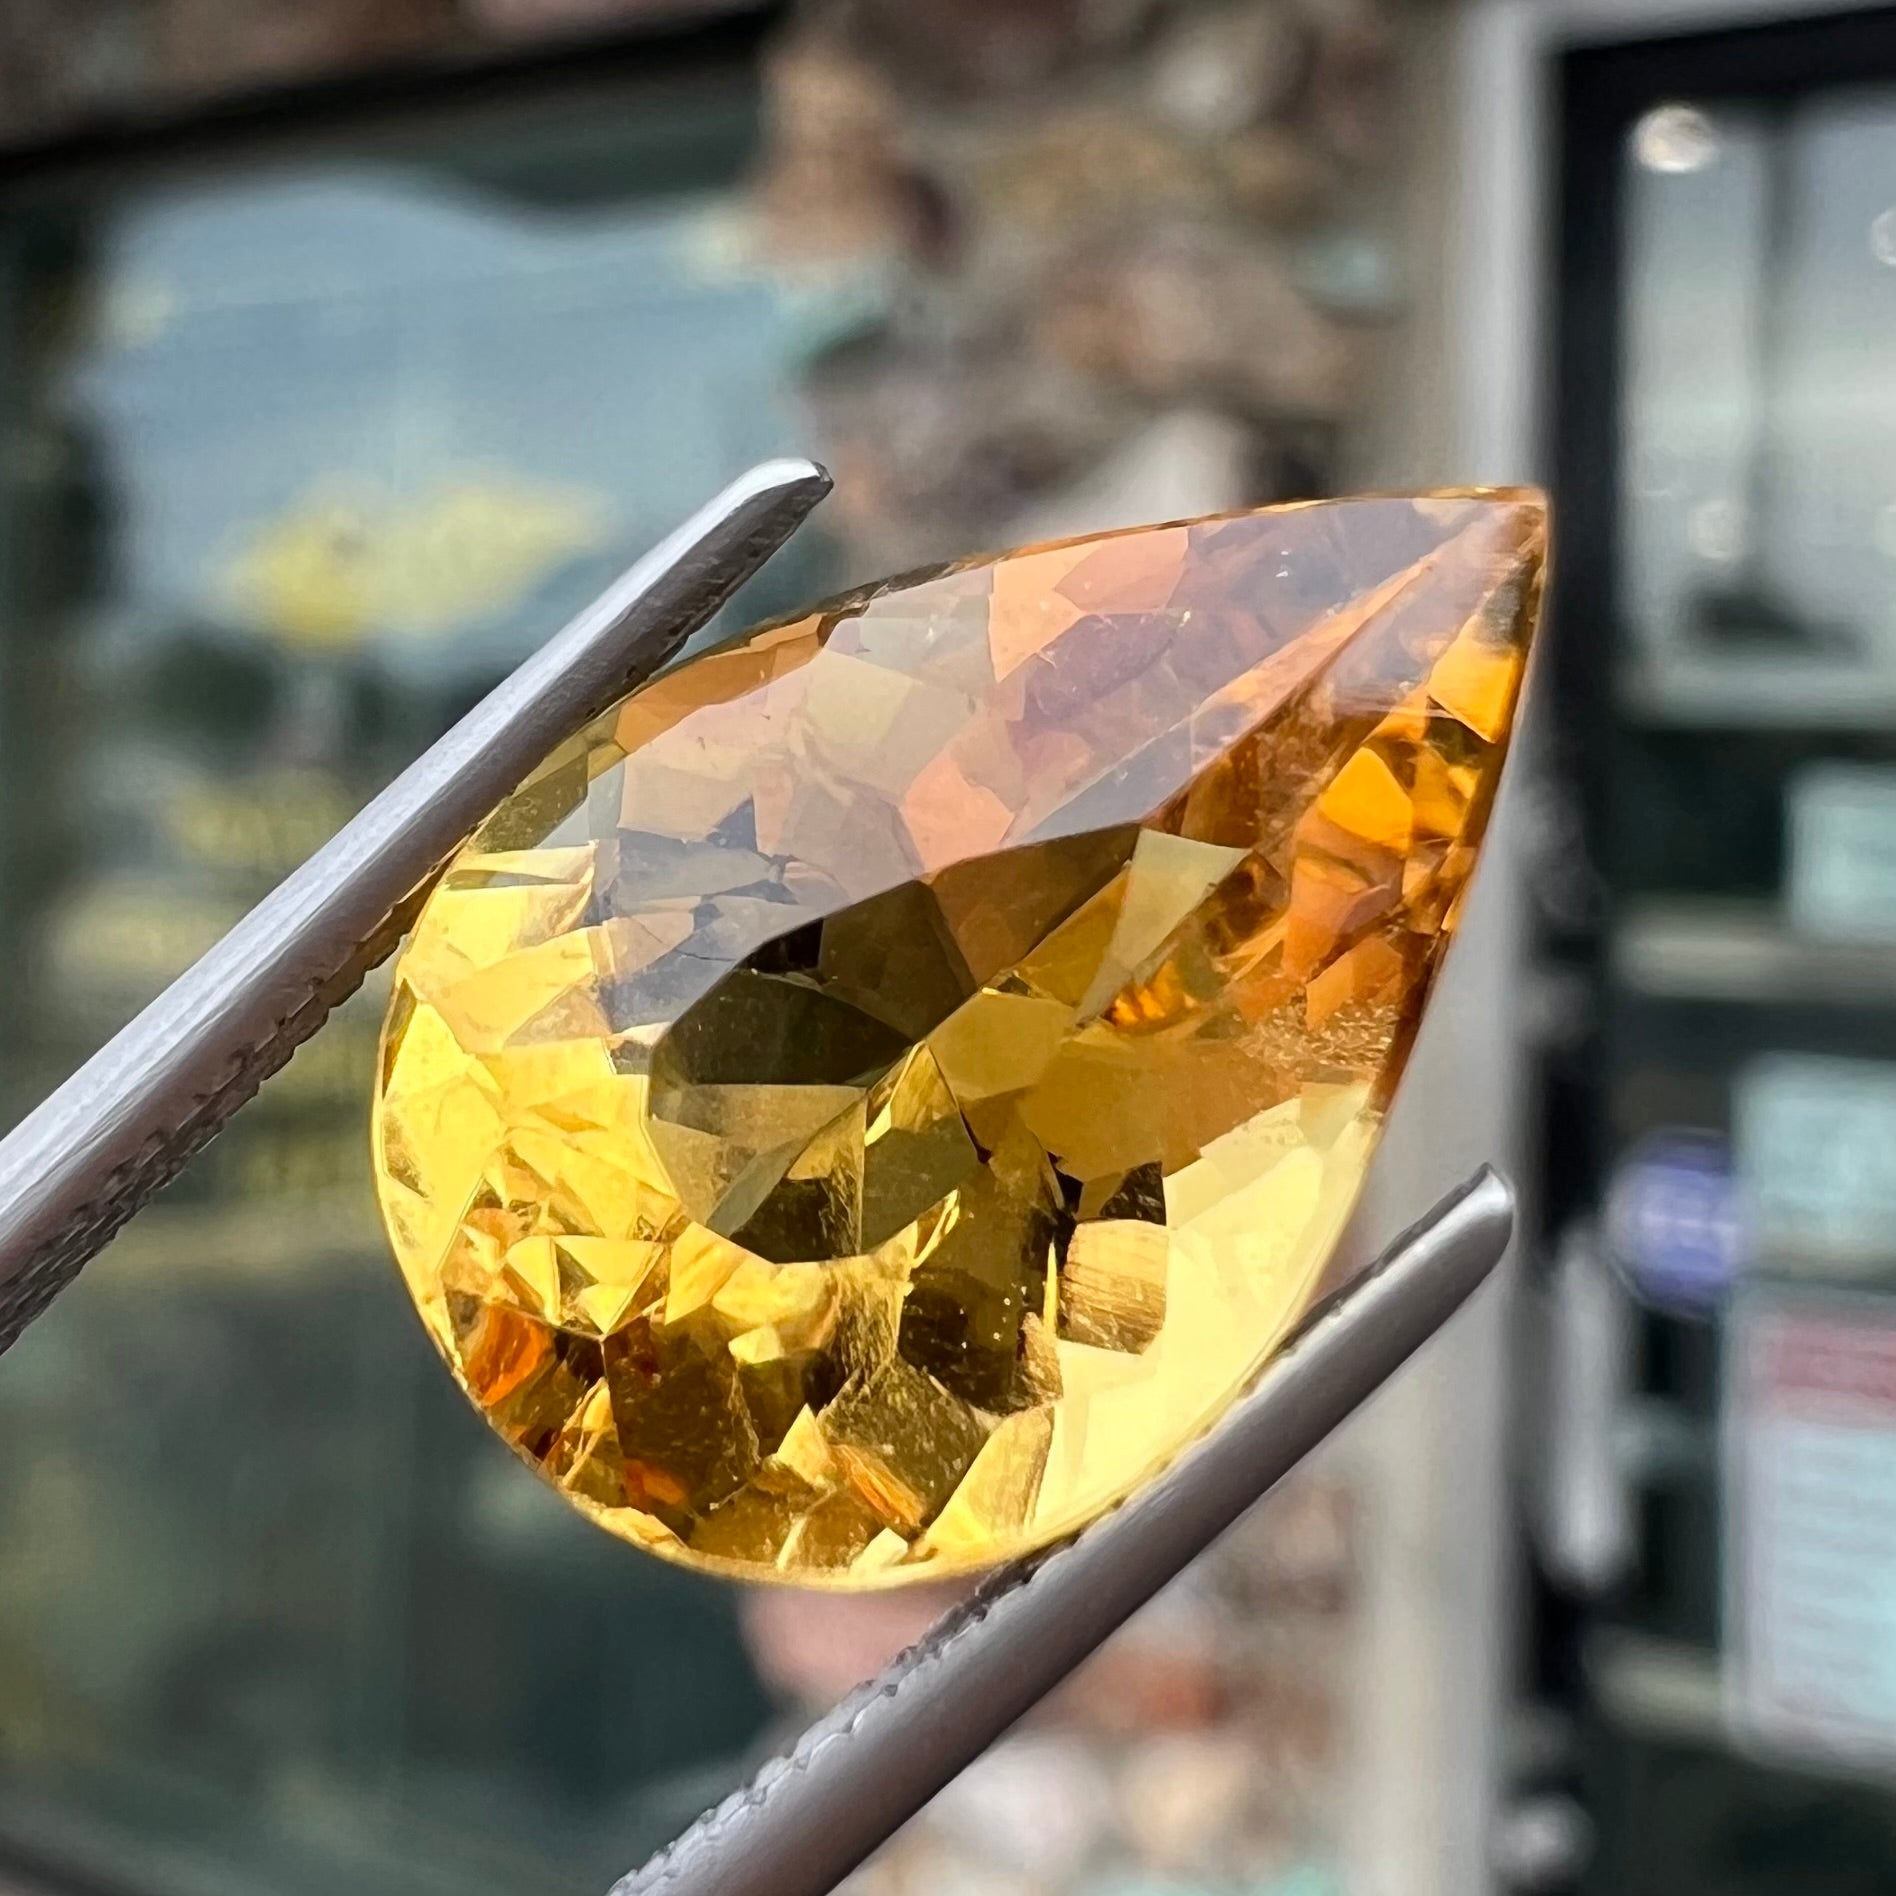 A loose, pear shaped golden beryl gemstone.